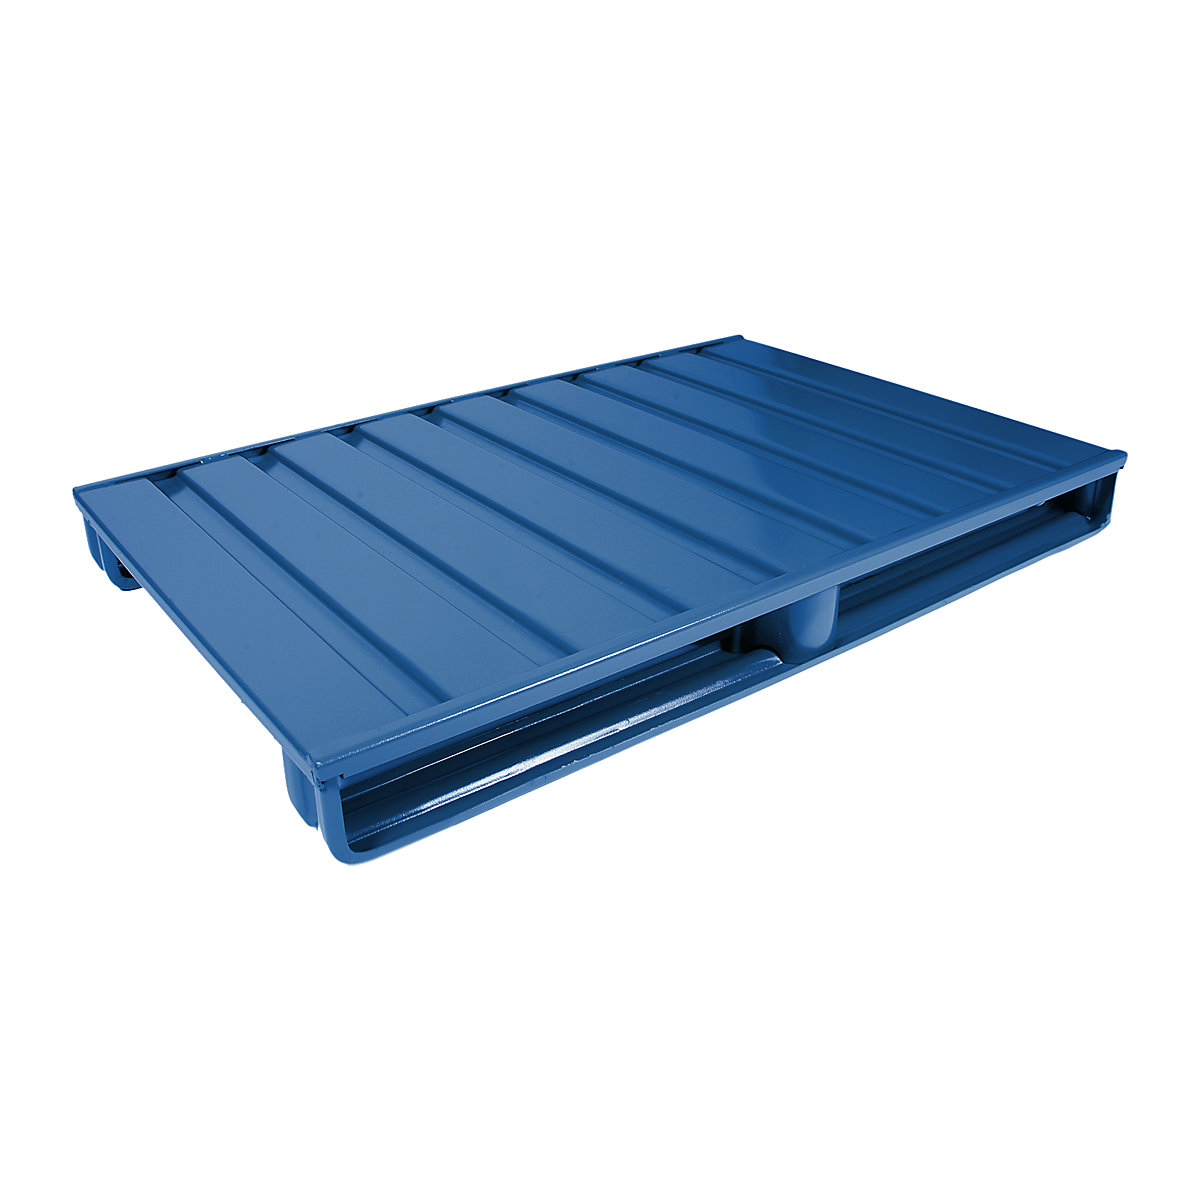 Flat steel pallet – Heson, LxW 1000 x 800 mm, max. load 2000 kg, gentian blue, 10+ items-5